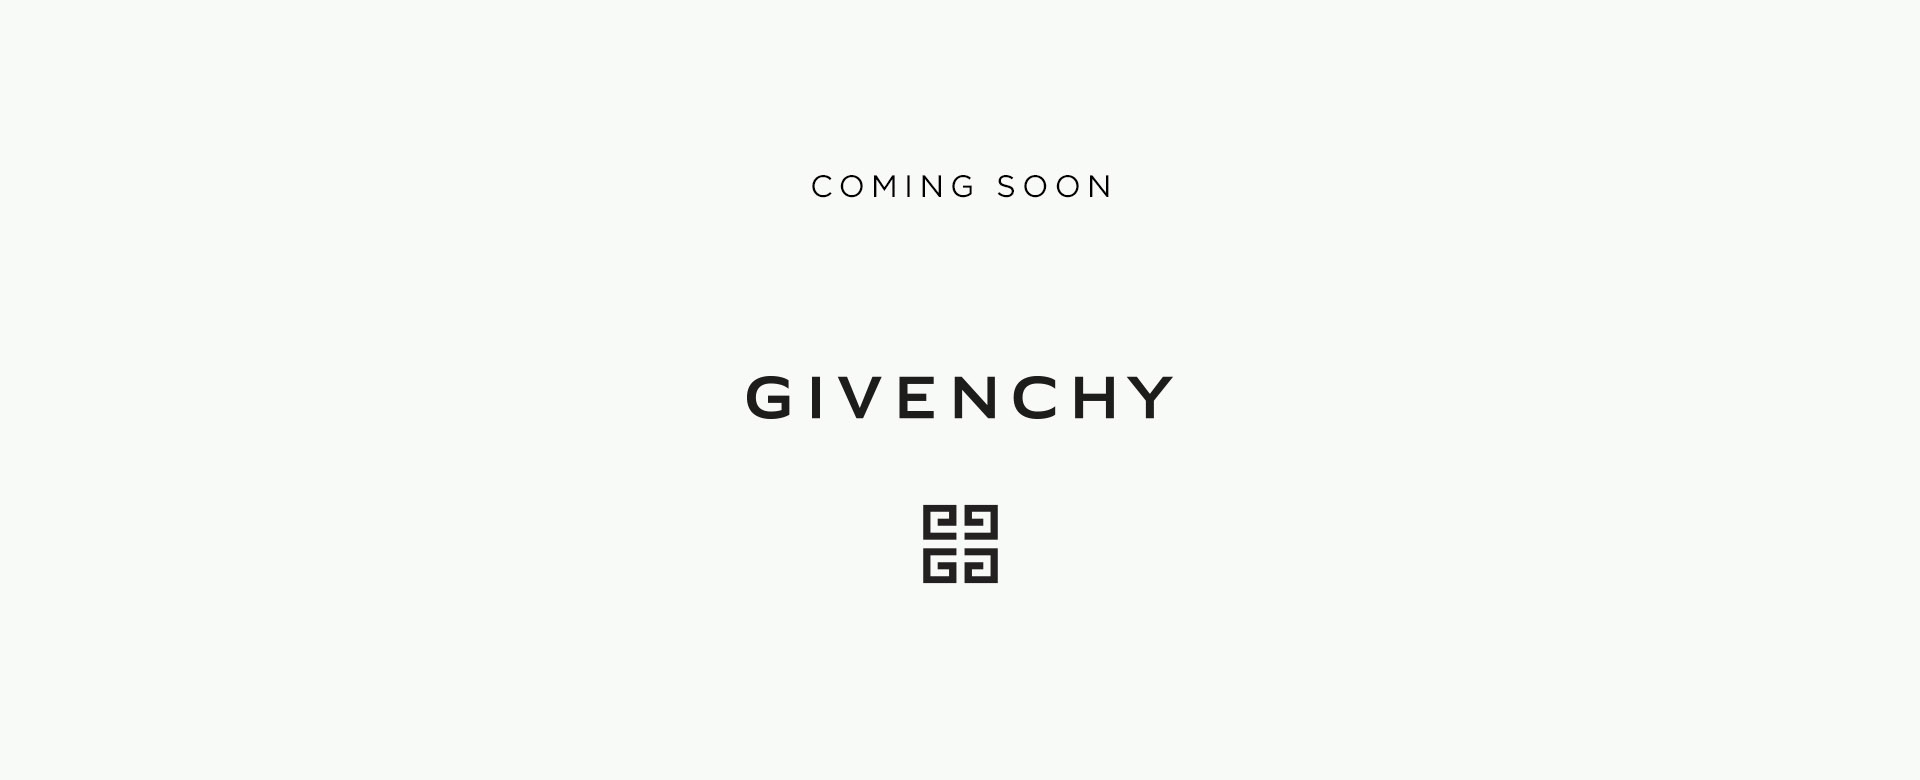 Givenchy arriveert op Kids around 